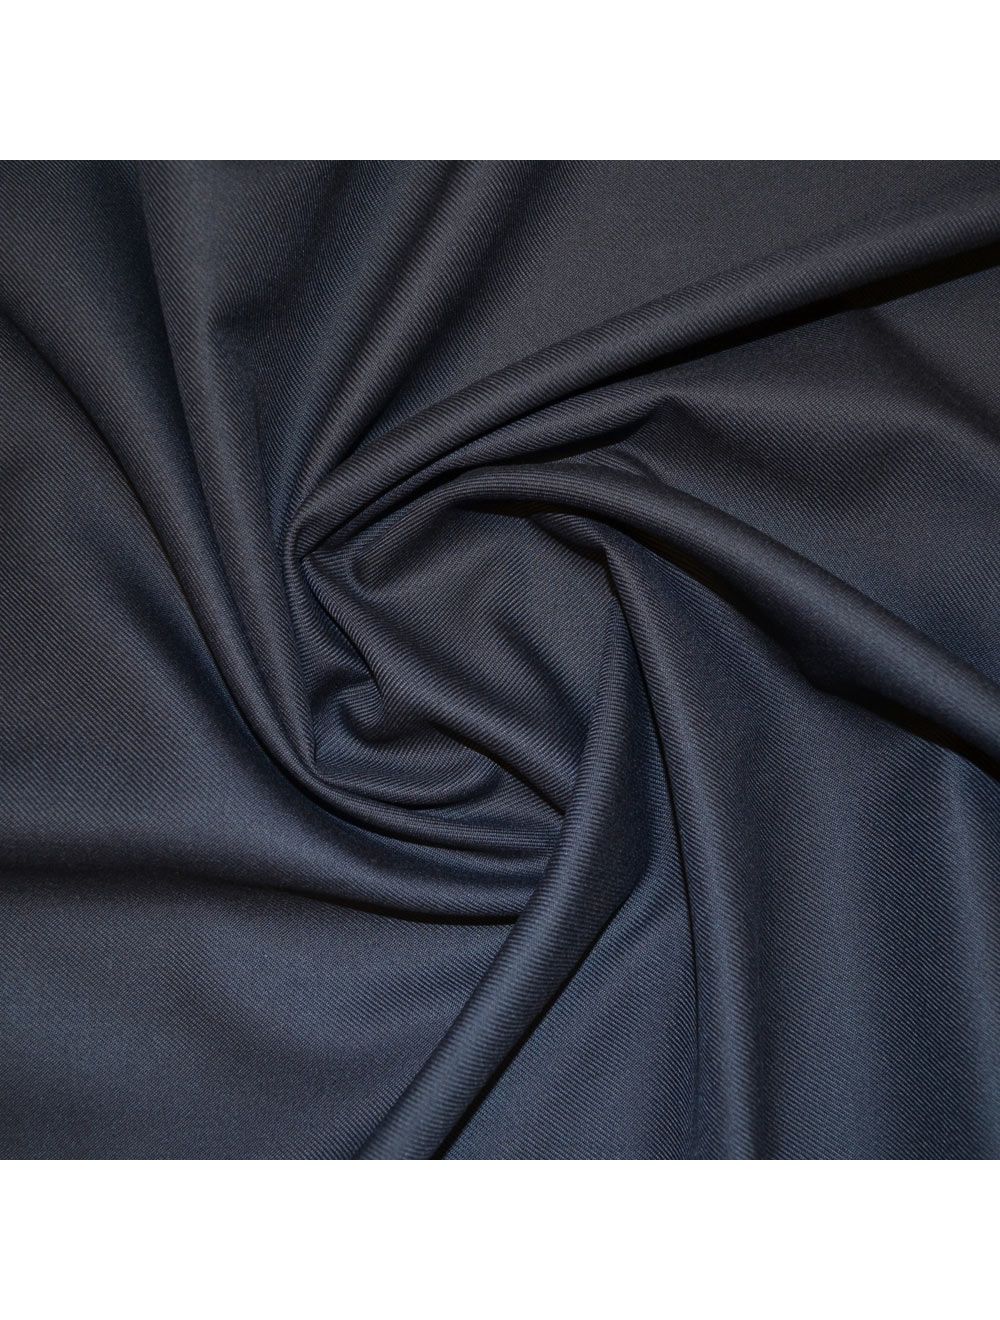 Navy Heavy Polyester/Viscose Twill Fabric | Fabrics | Calico Laine